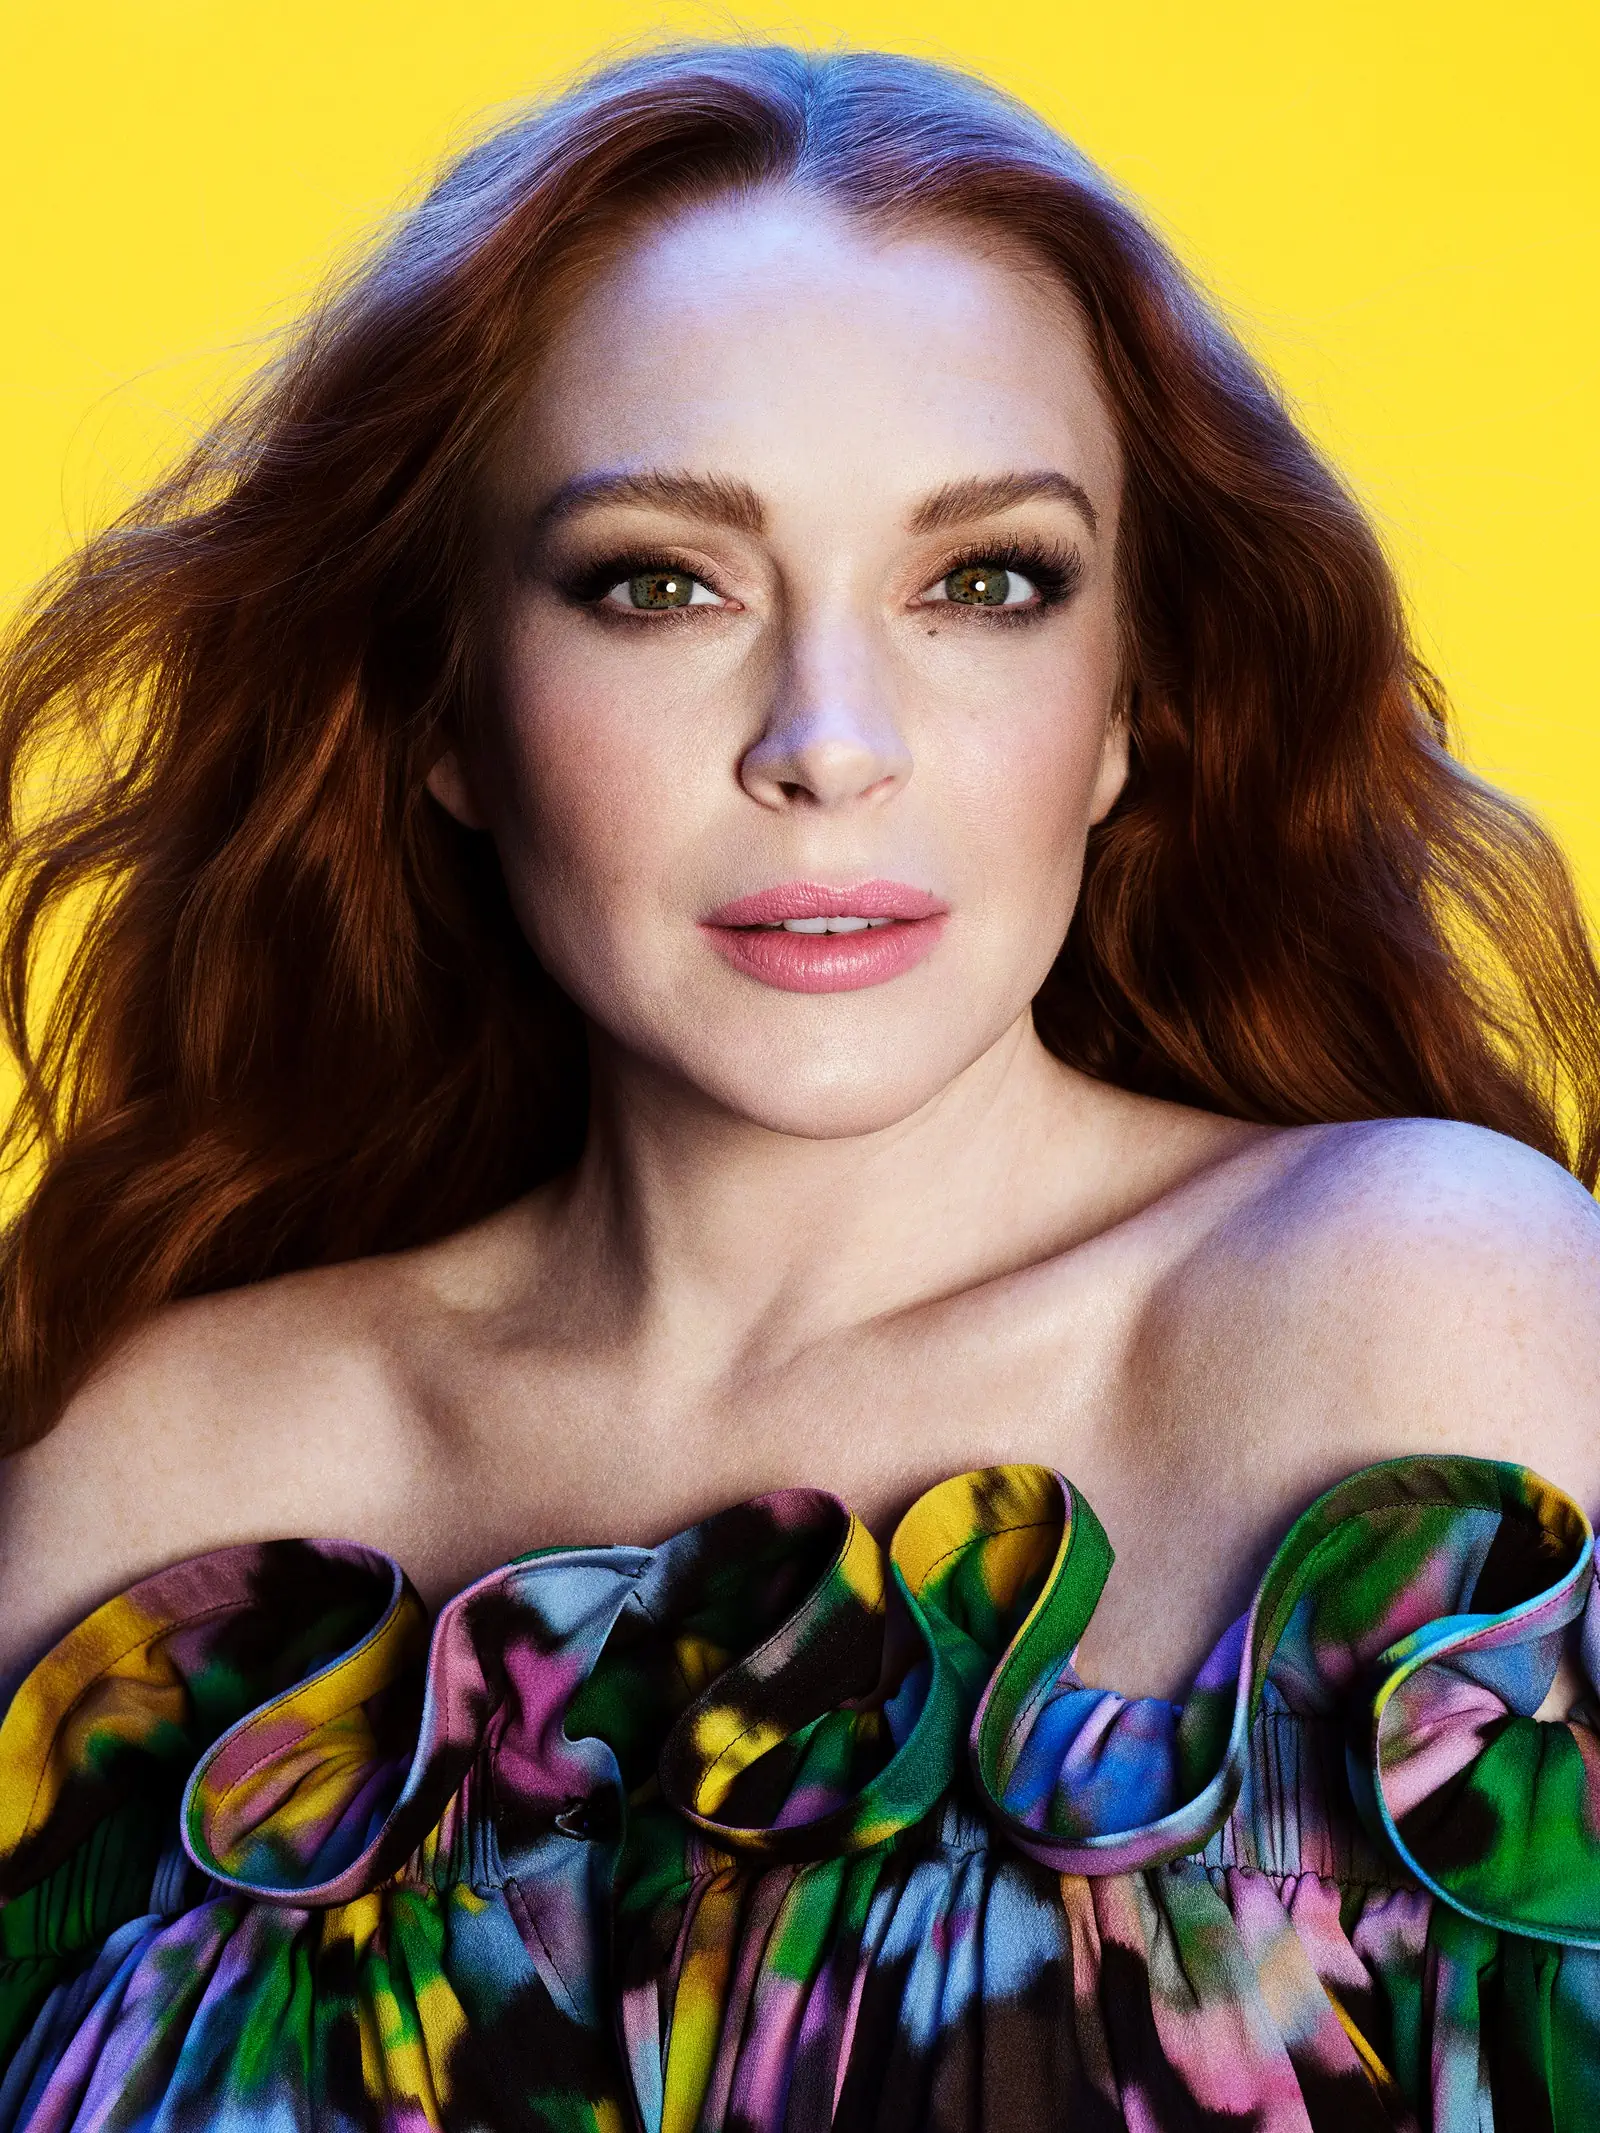 Lindsay Lohan covers Allure US June 2023 by Ben Hassett